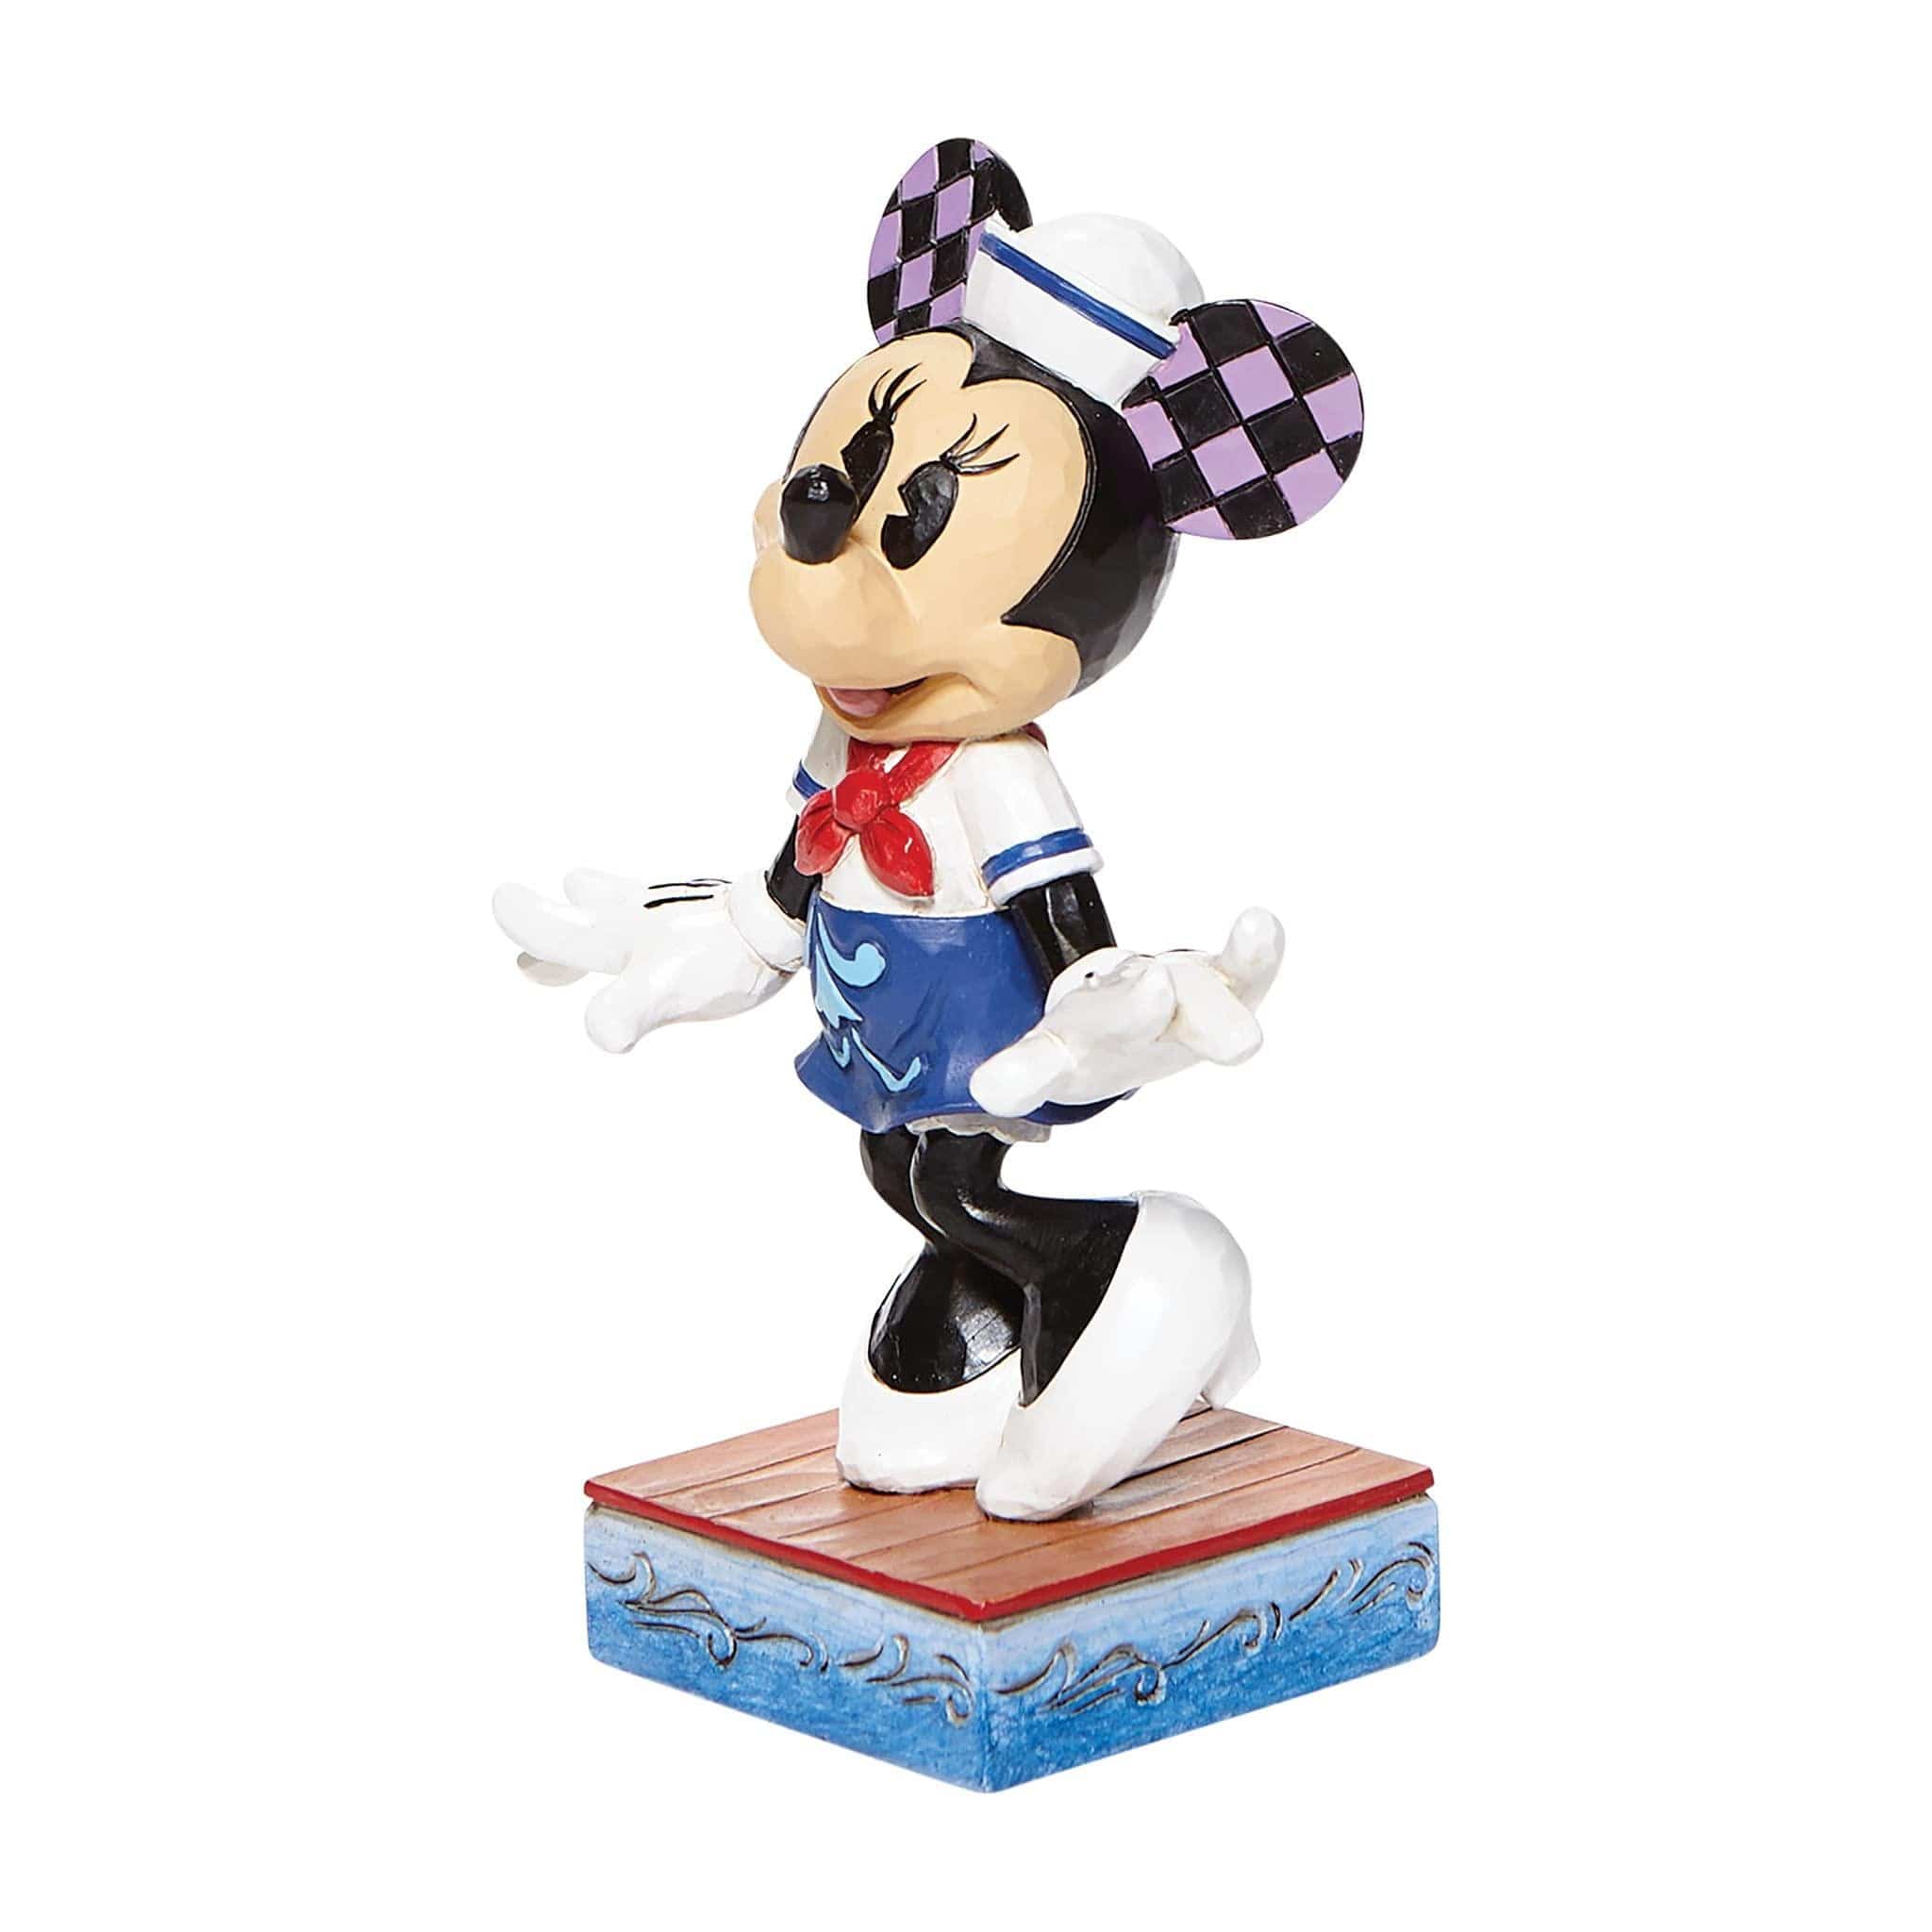 Enesco Disney Ornament Disney Traditions Figurine - Sassy Sailor - Minnie Mouse Personality Pose Figurine